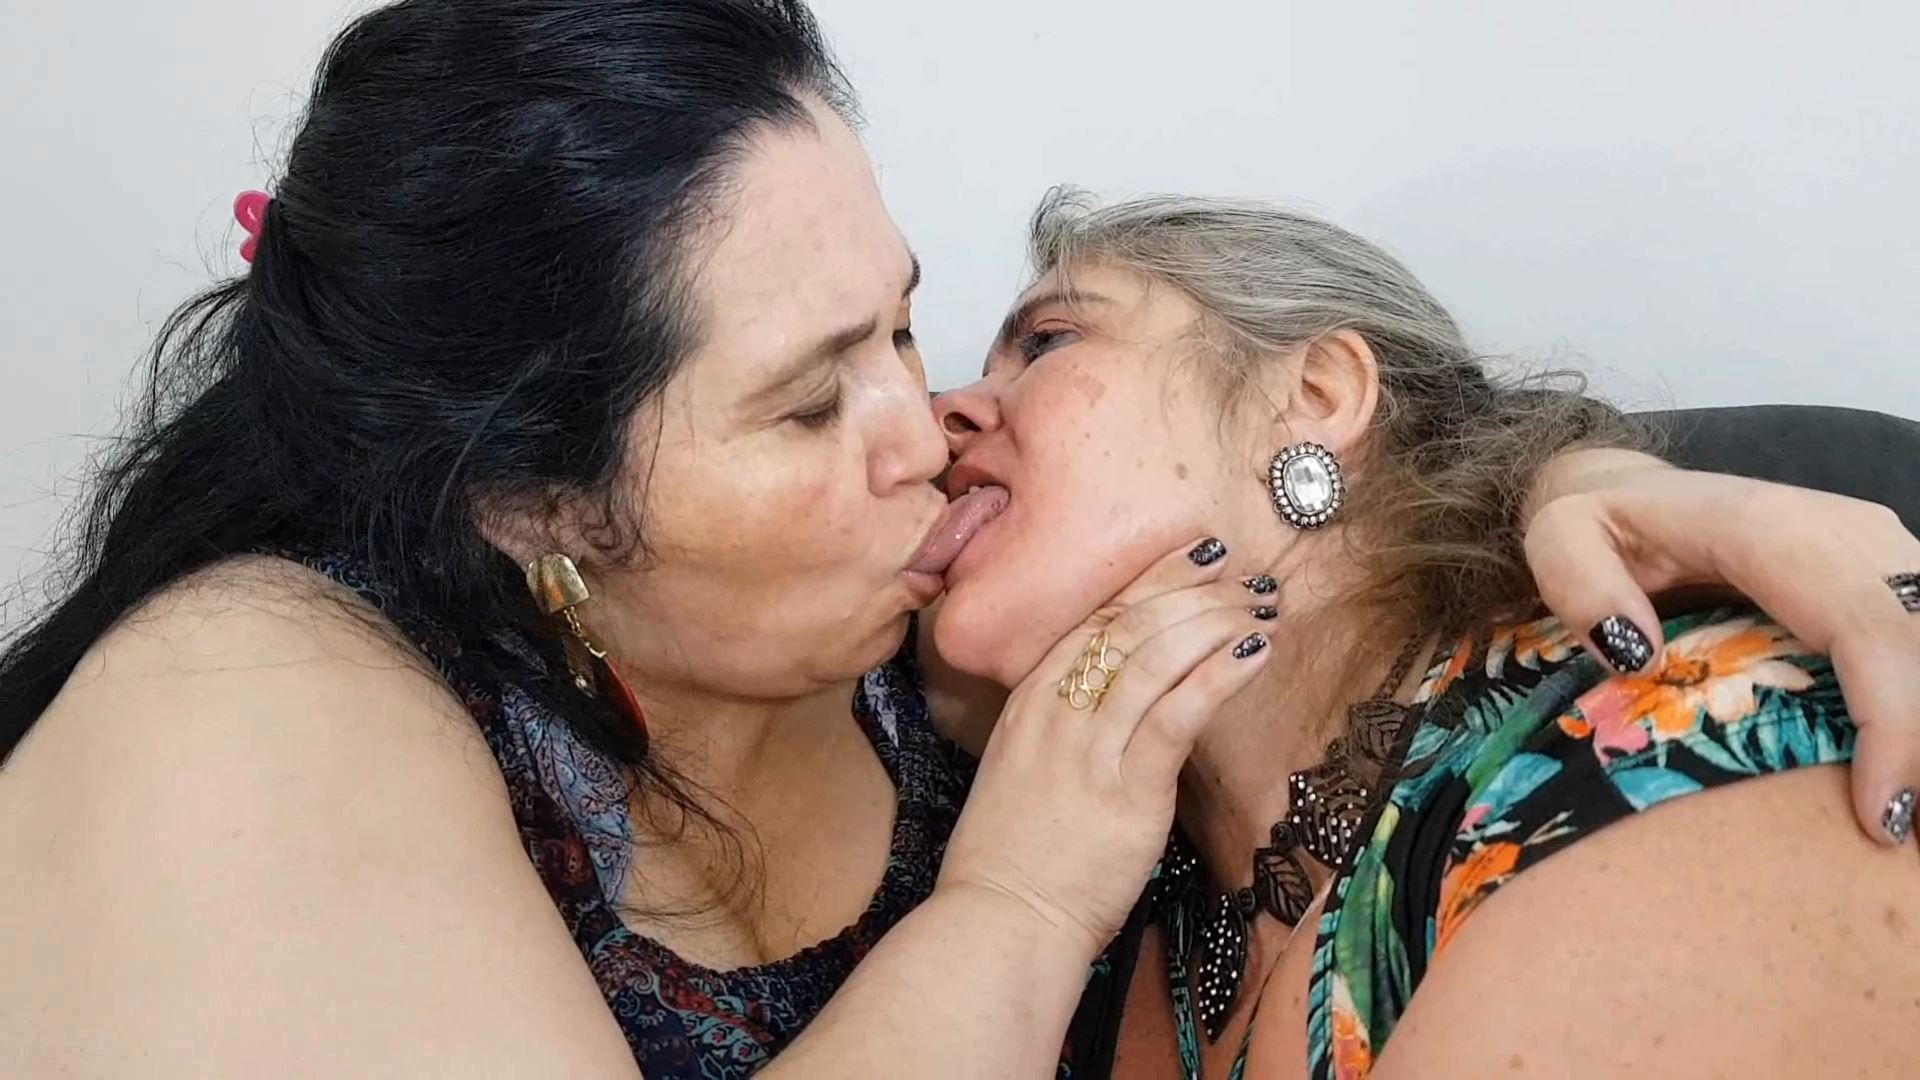 Hot SSBBW Passionate Lesbians Kisses - KARINA CRUEL FETISH VIDEOS - FULL HD...